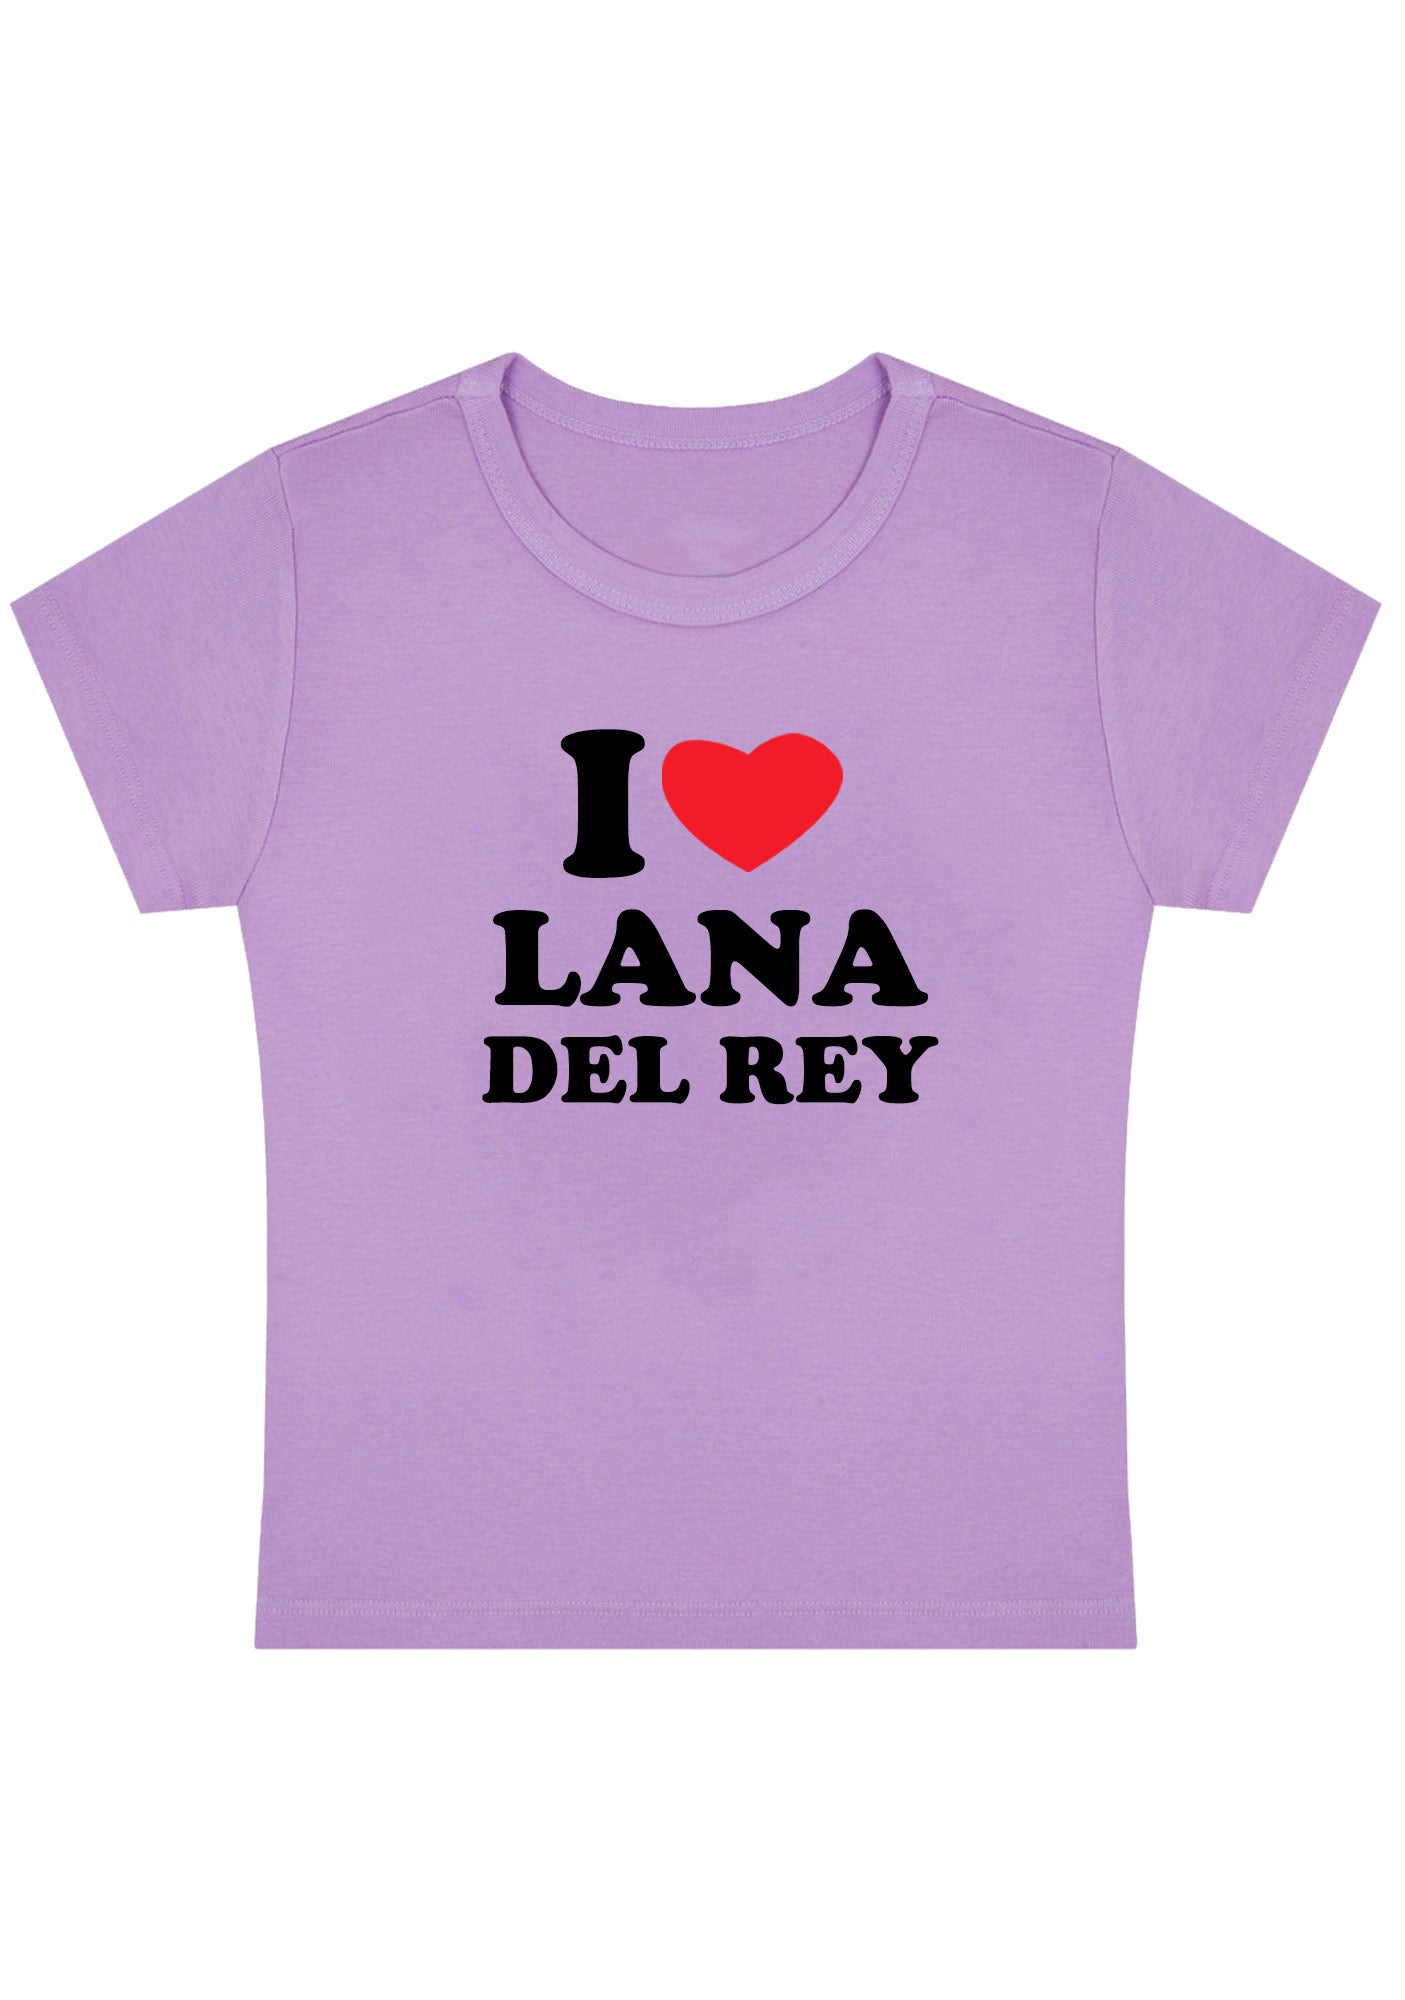 I Love Lanx Del Rey Y2K Baby Tee